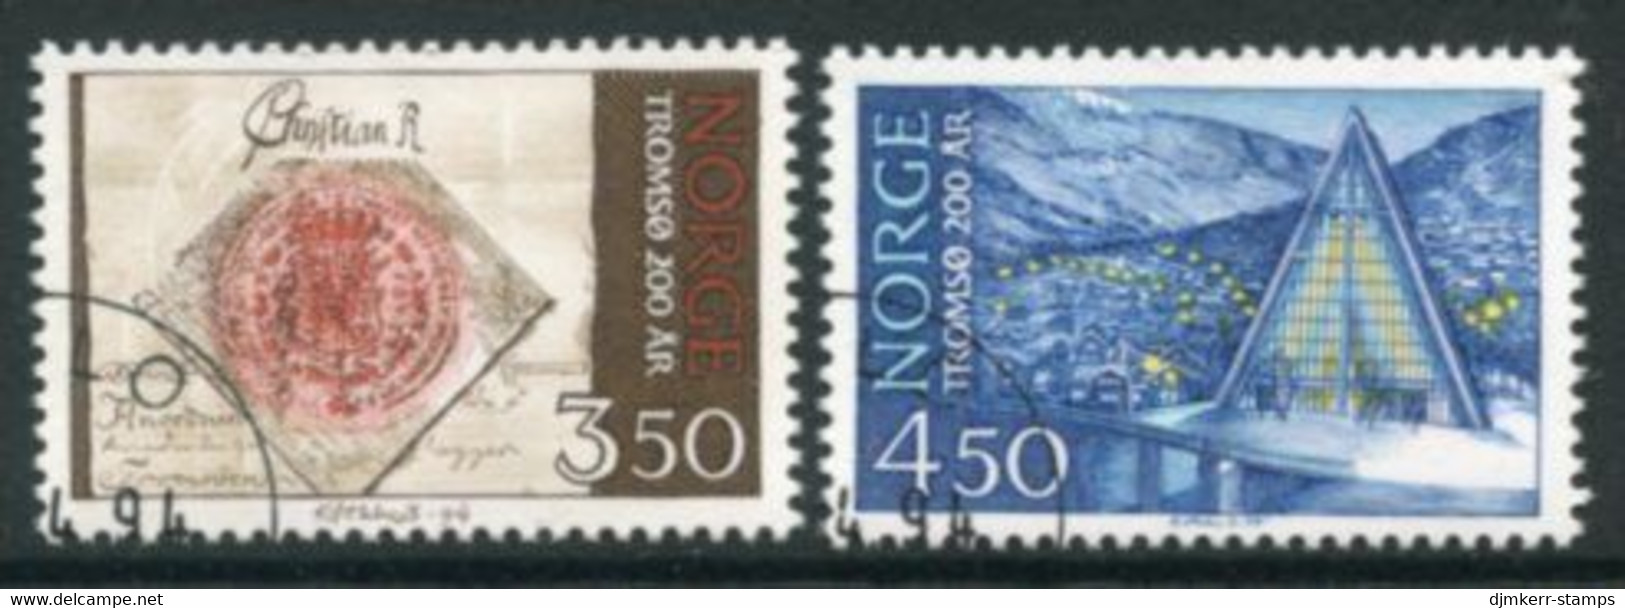 NORWAY 1994 Bicentenary Of Tromsø Used.   Michel 1154-55 - Used Stamps